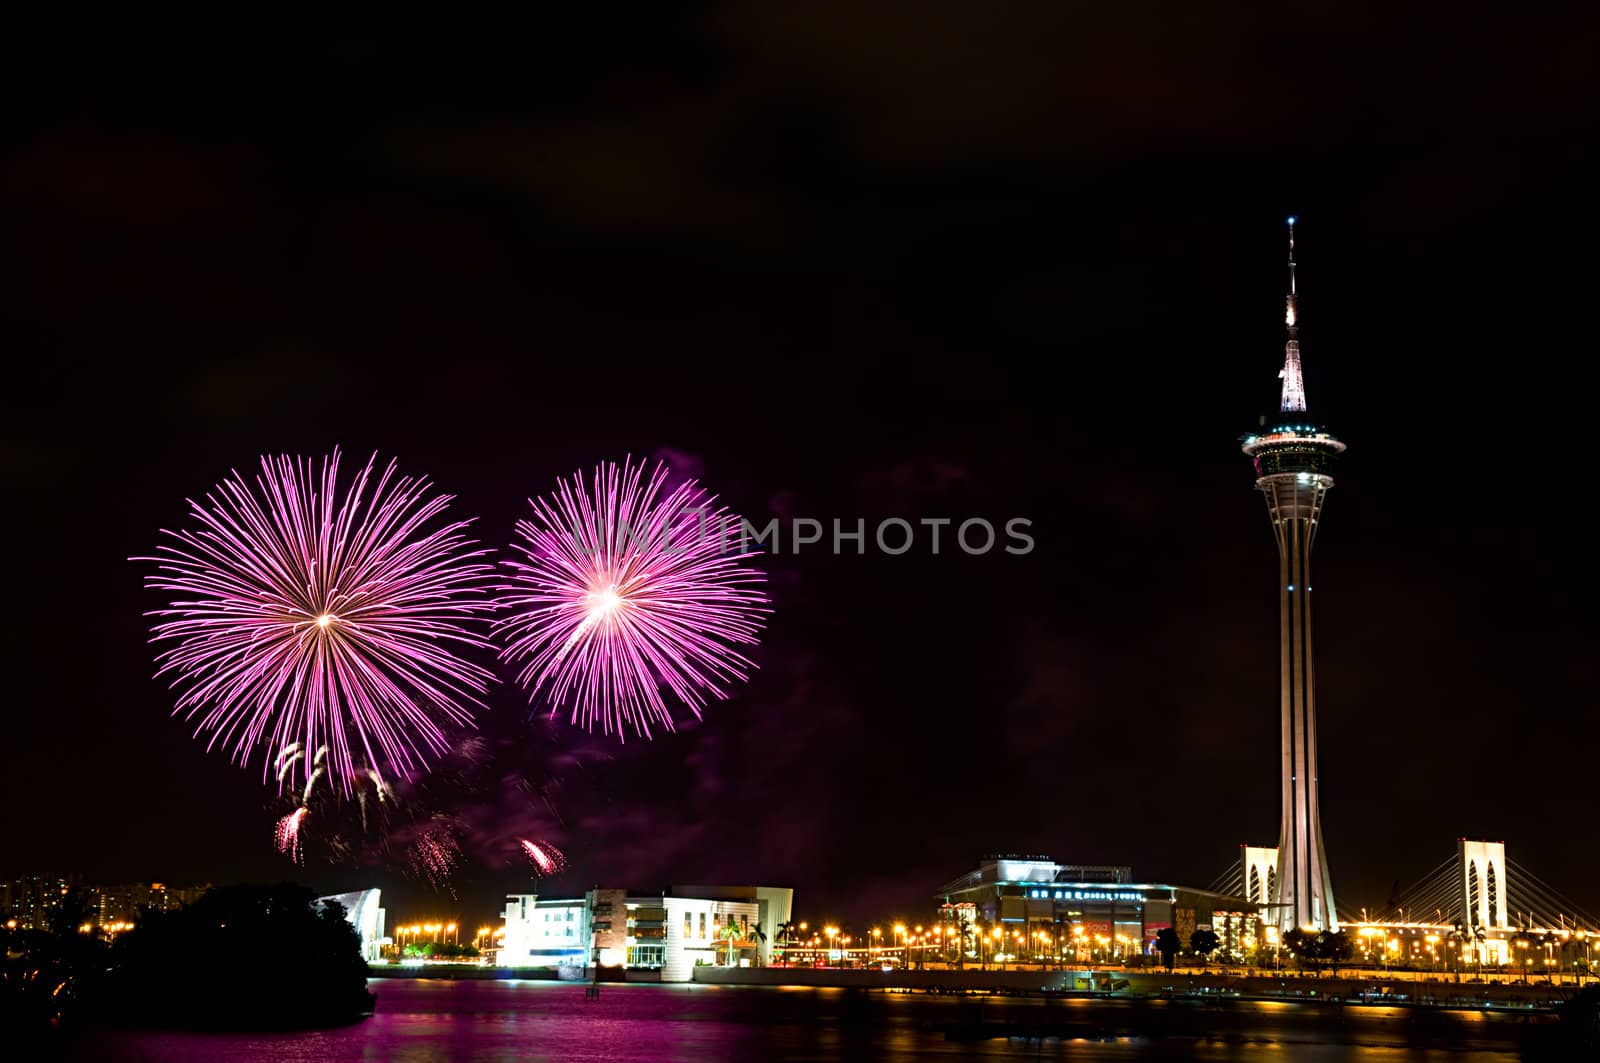 Macau International Fireworks Display Contest by tito